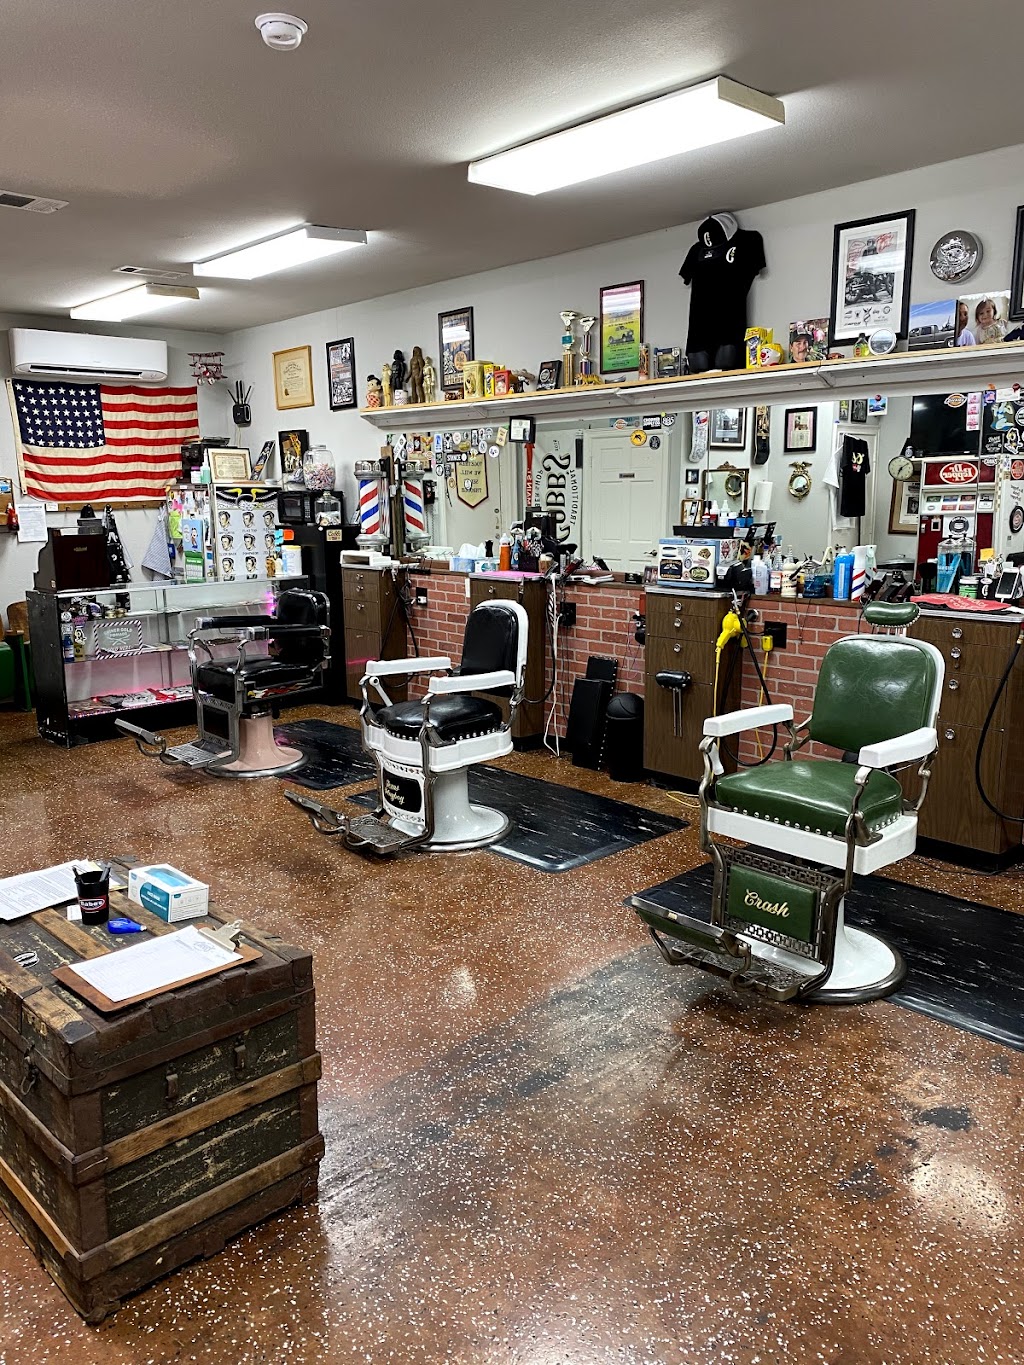 Cobb’s Barbershop | 8000 Main St B, North Richland Hills, TX 76182, USA | Phone: (817) 576-4778